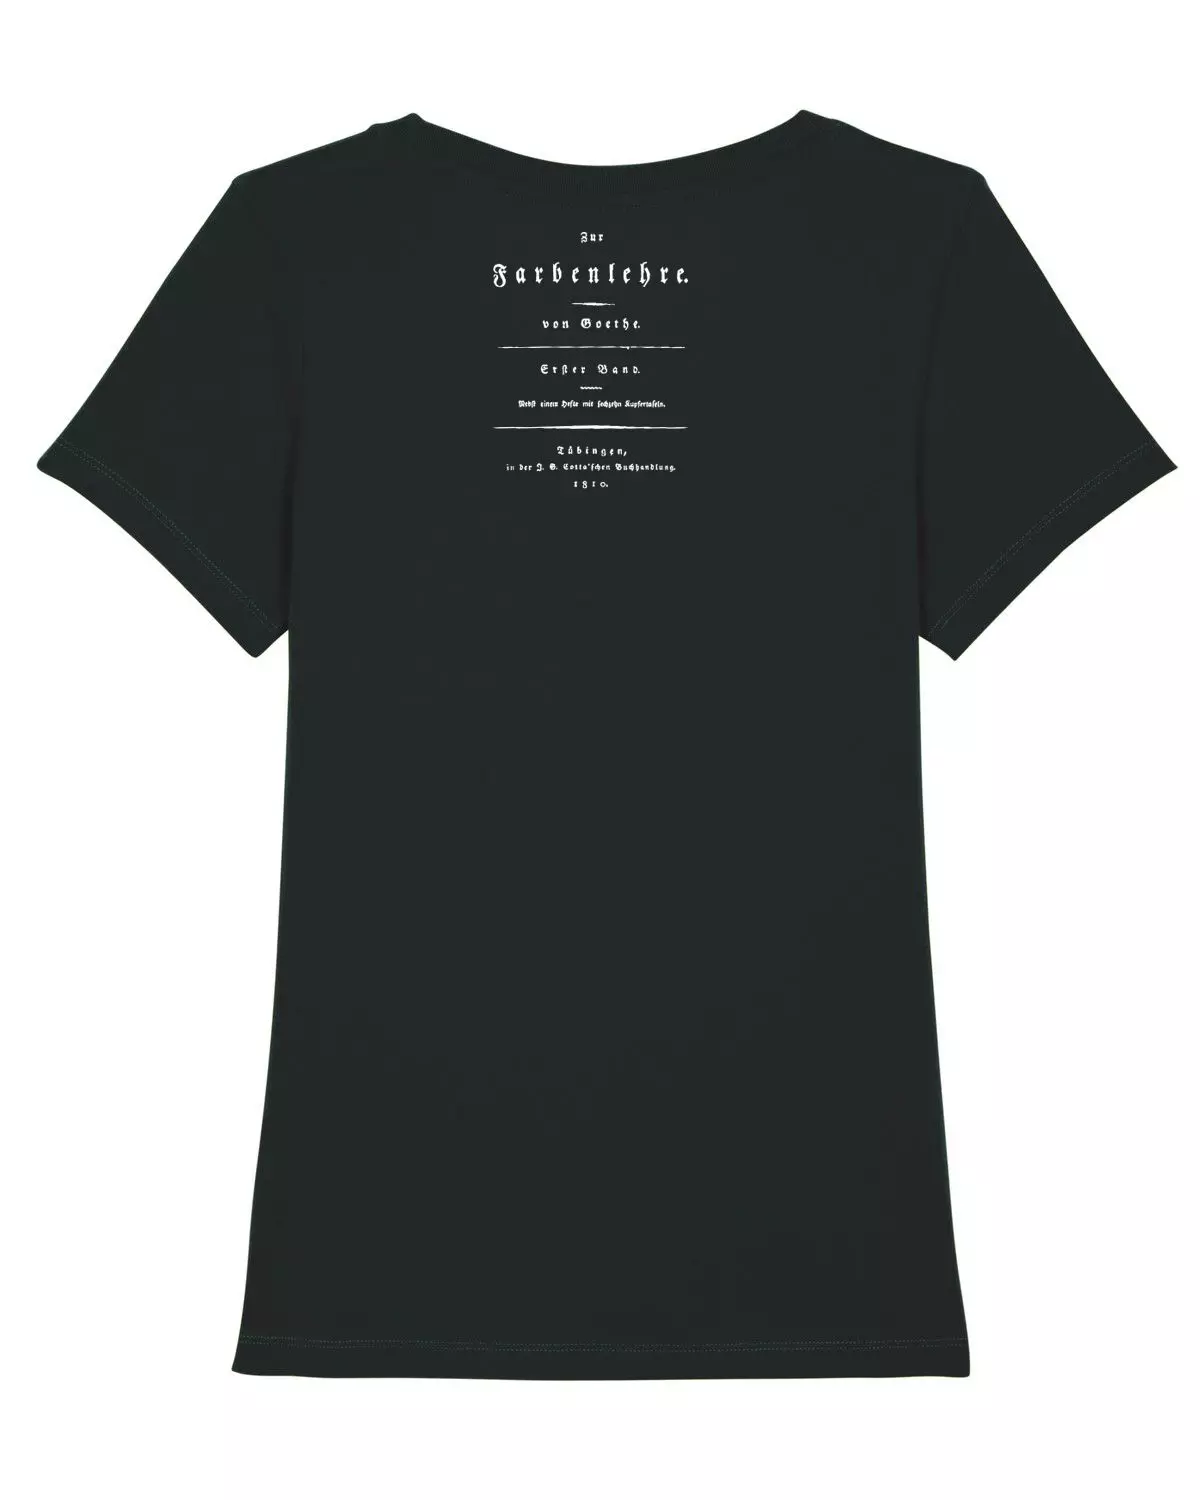 Science-T-Shirt Kunst Modell: Farbenlehre